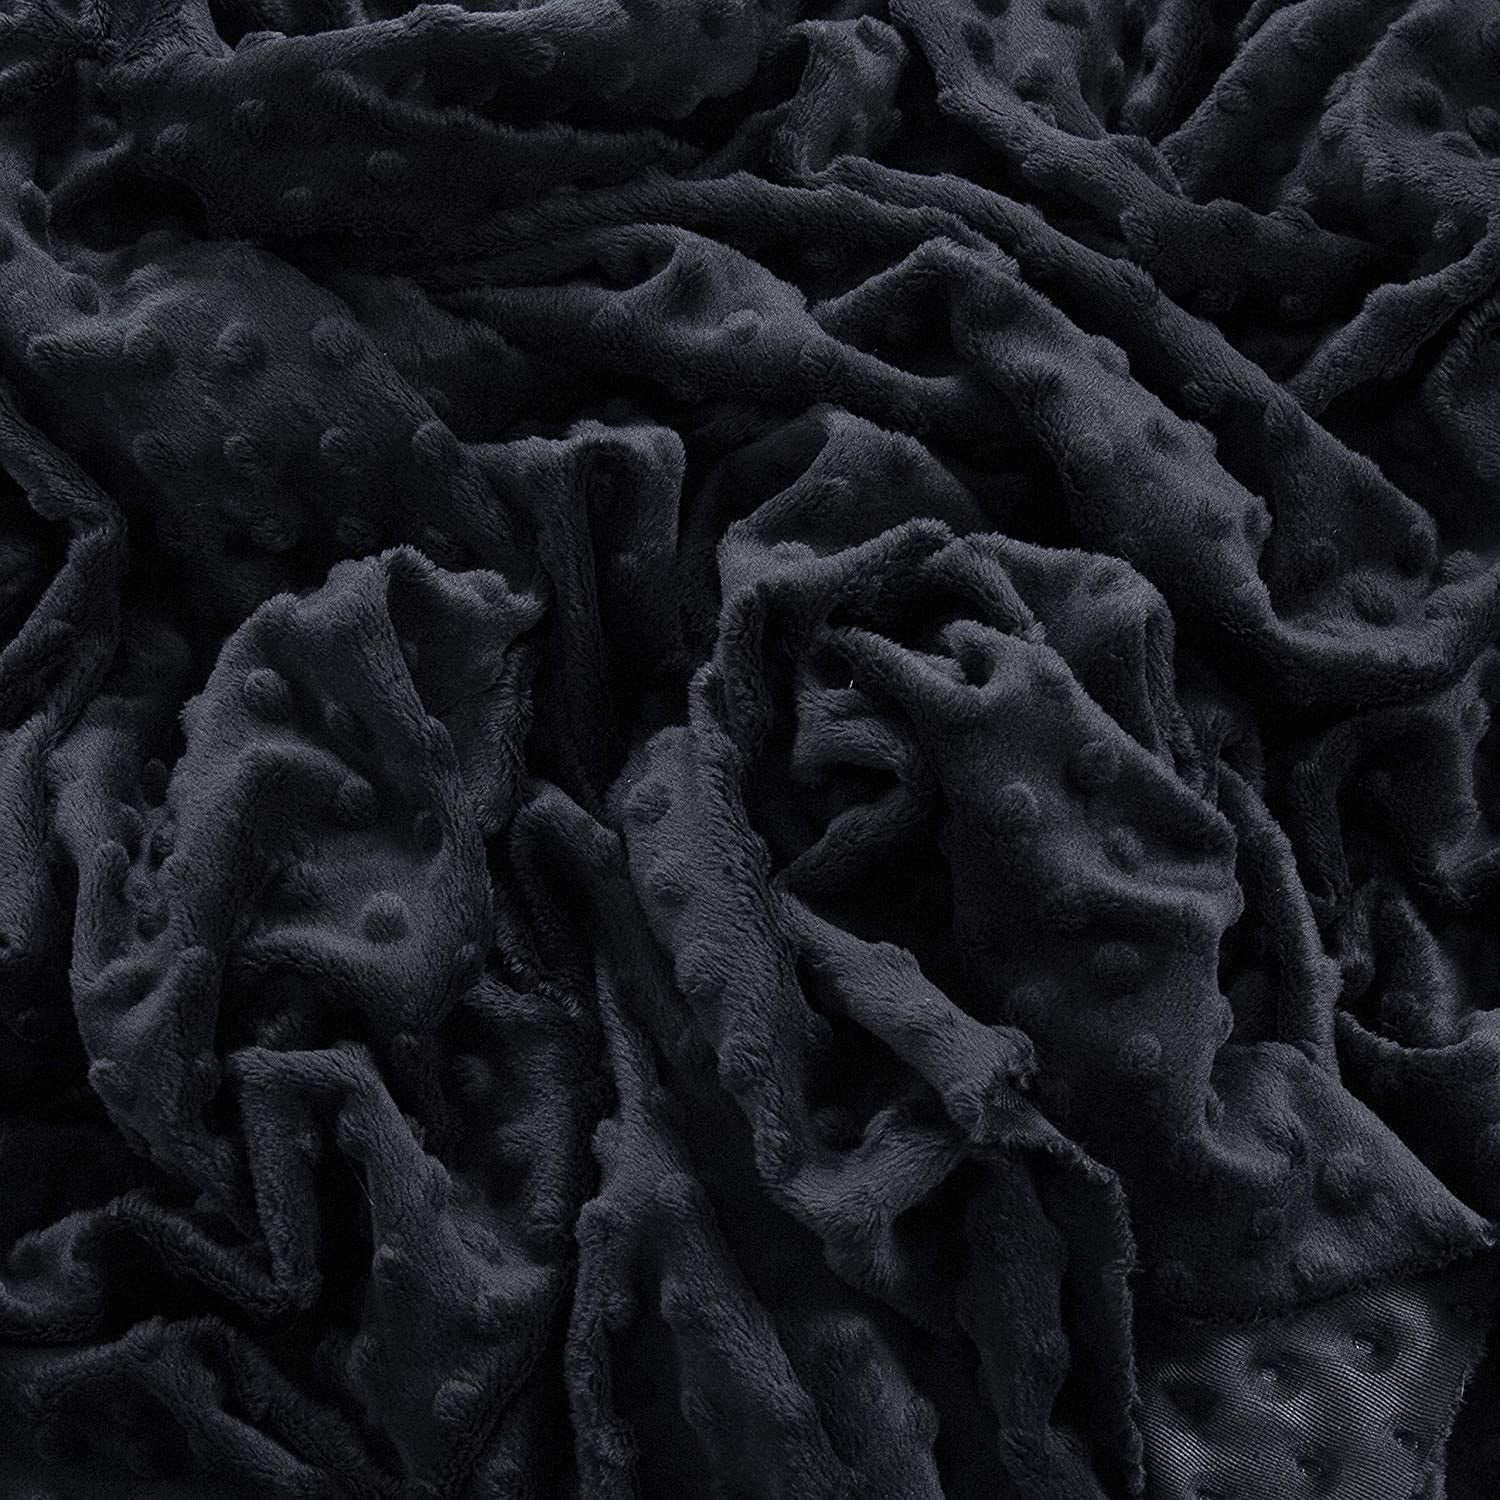 FabricLA Shaggy Faux Fur Fabric by The Yard - 72 x 60 Inches (180 cm x 150